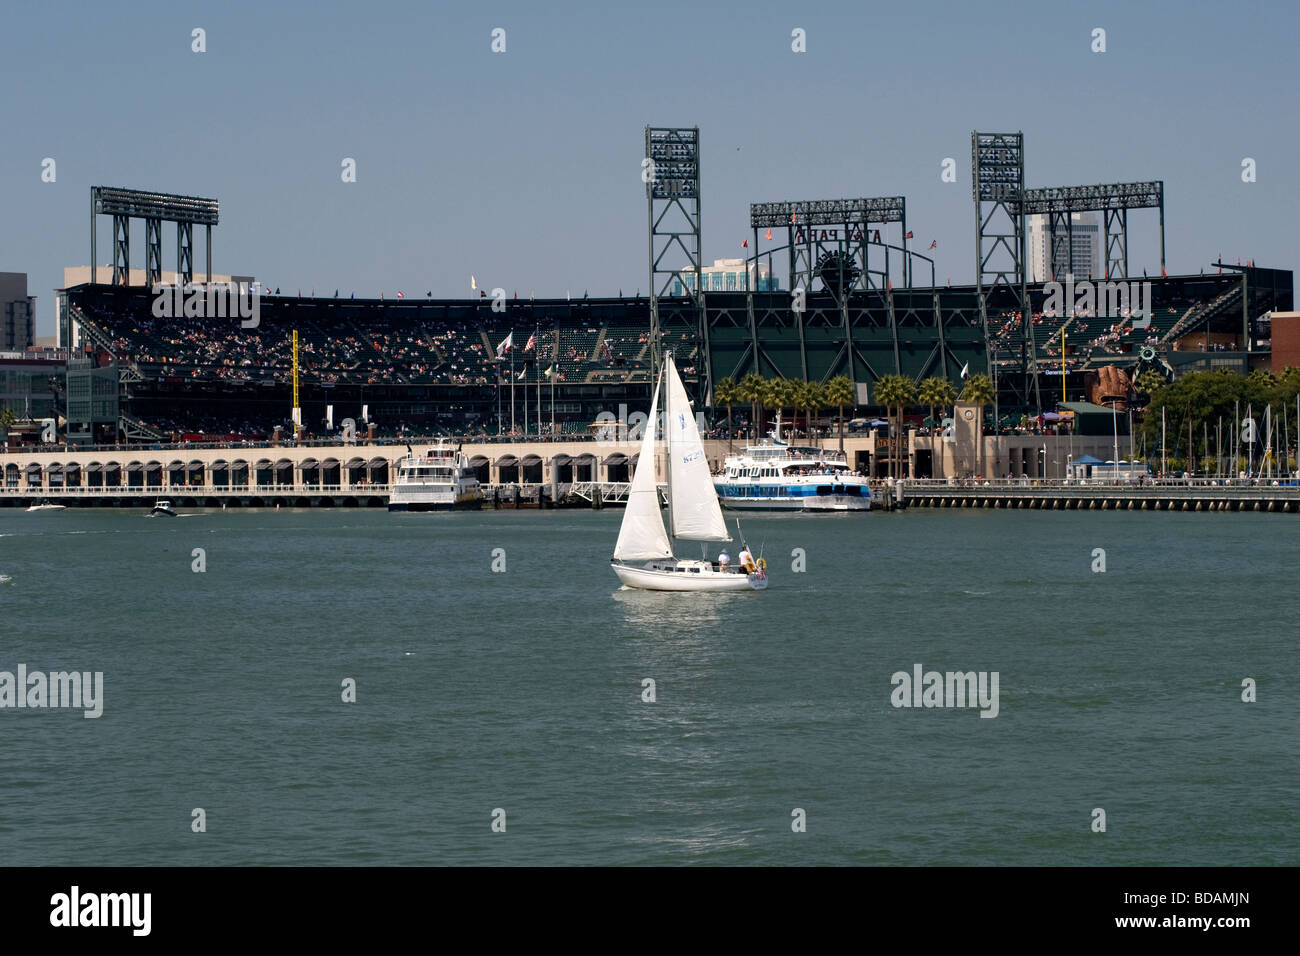 San Francisco Giants Game at AT&T Park. Stock Photo